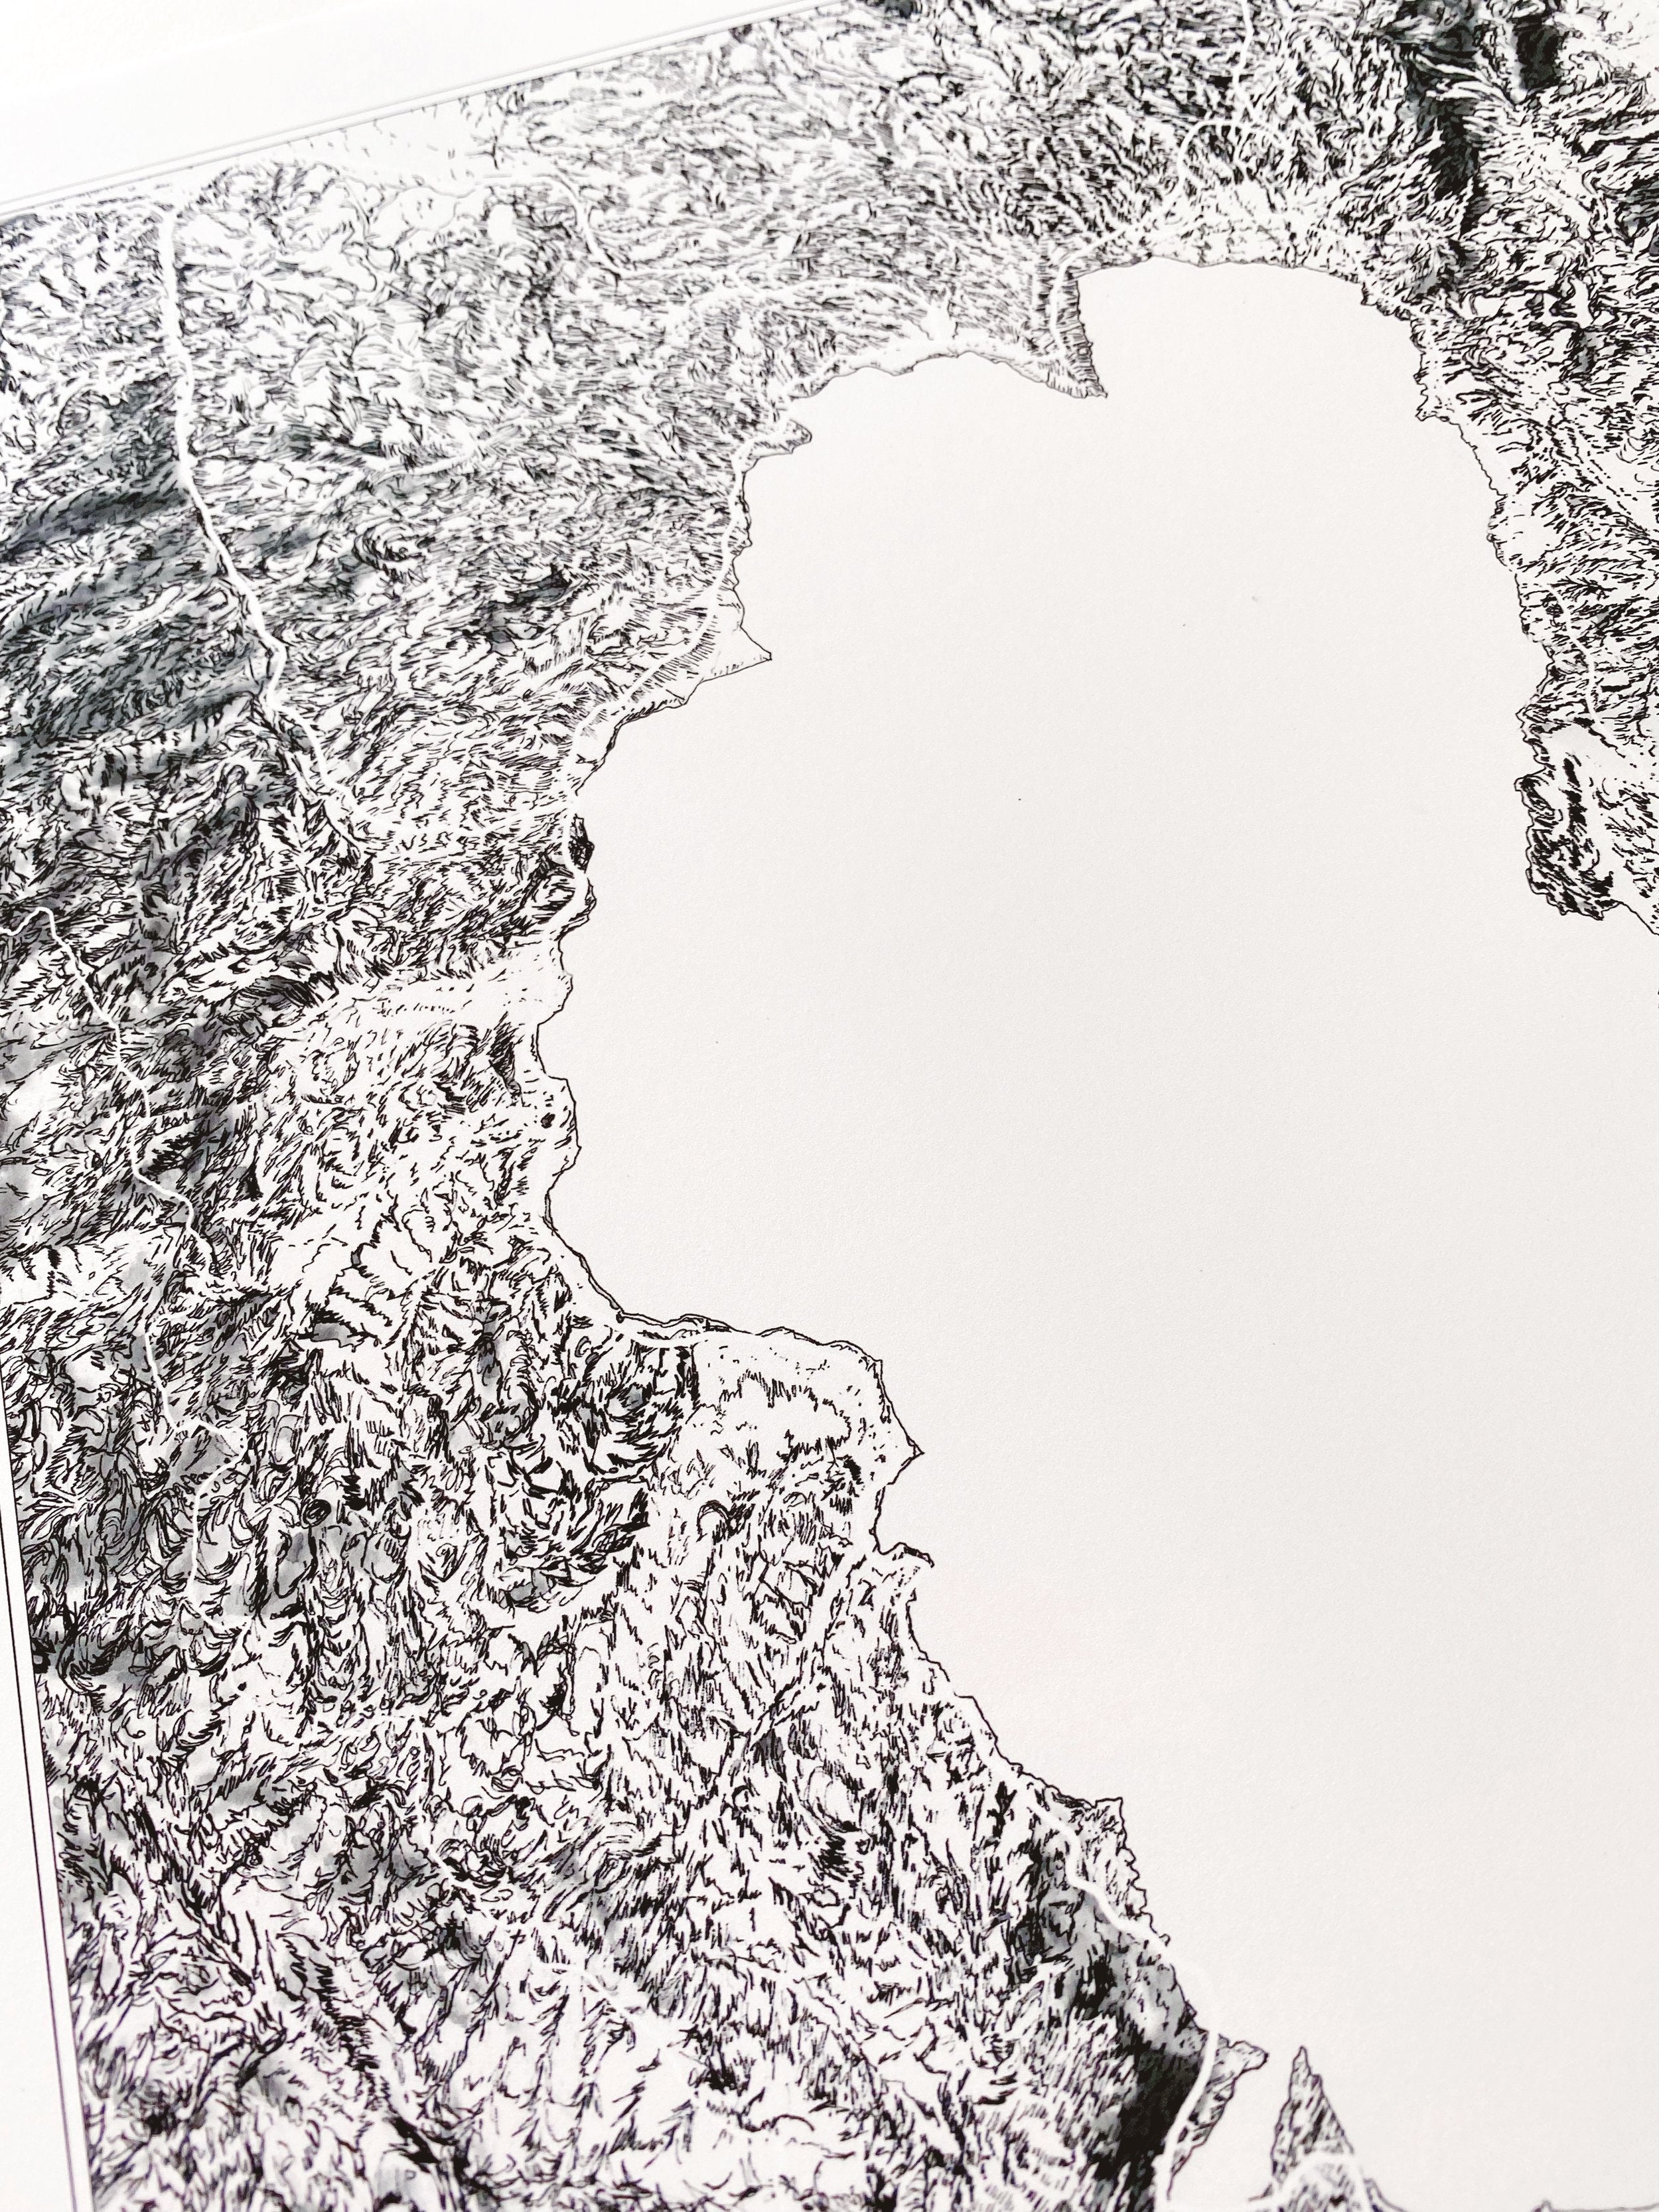 LAKE TAHOE Topographical Map-drawing: PRINT